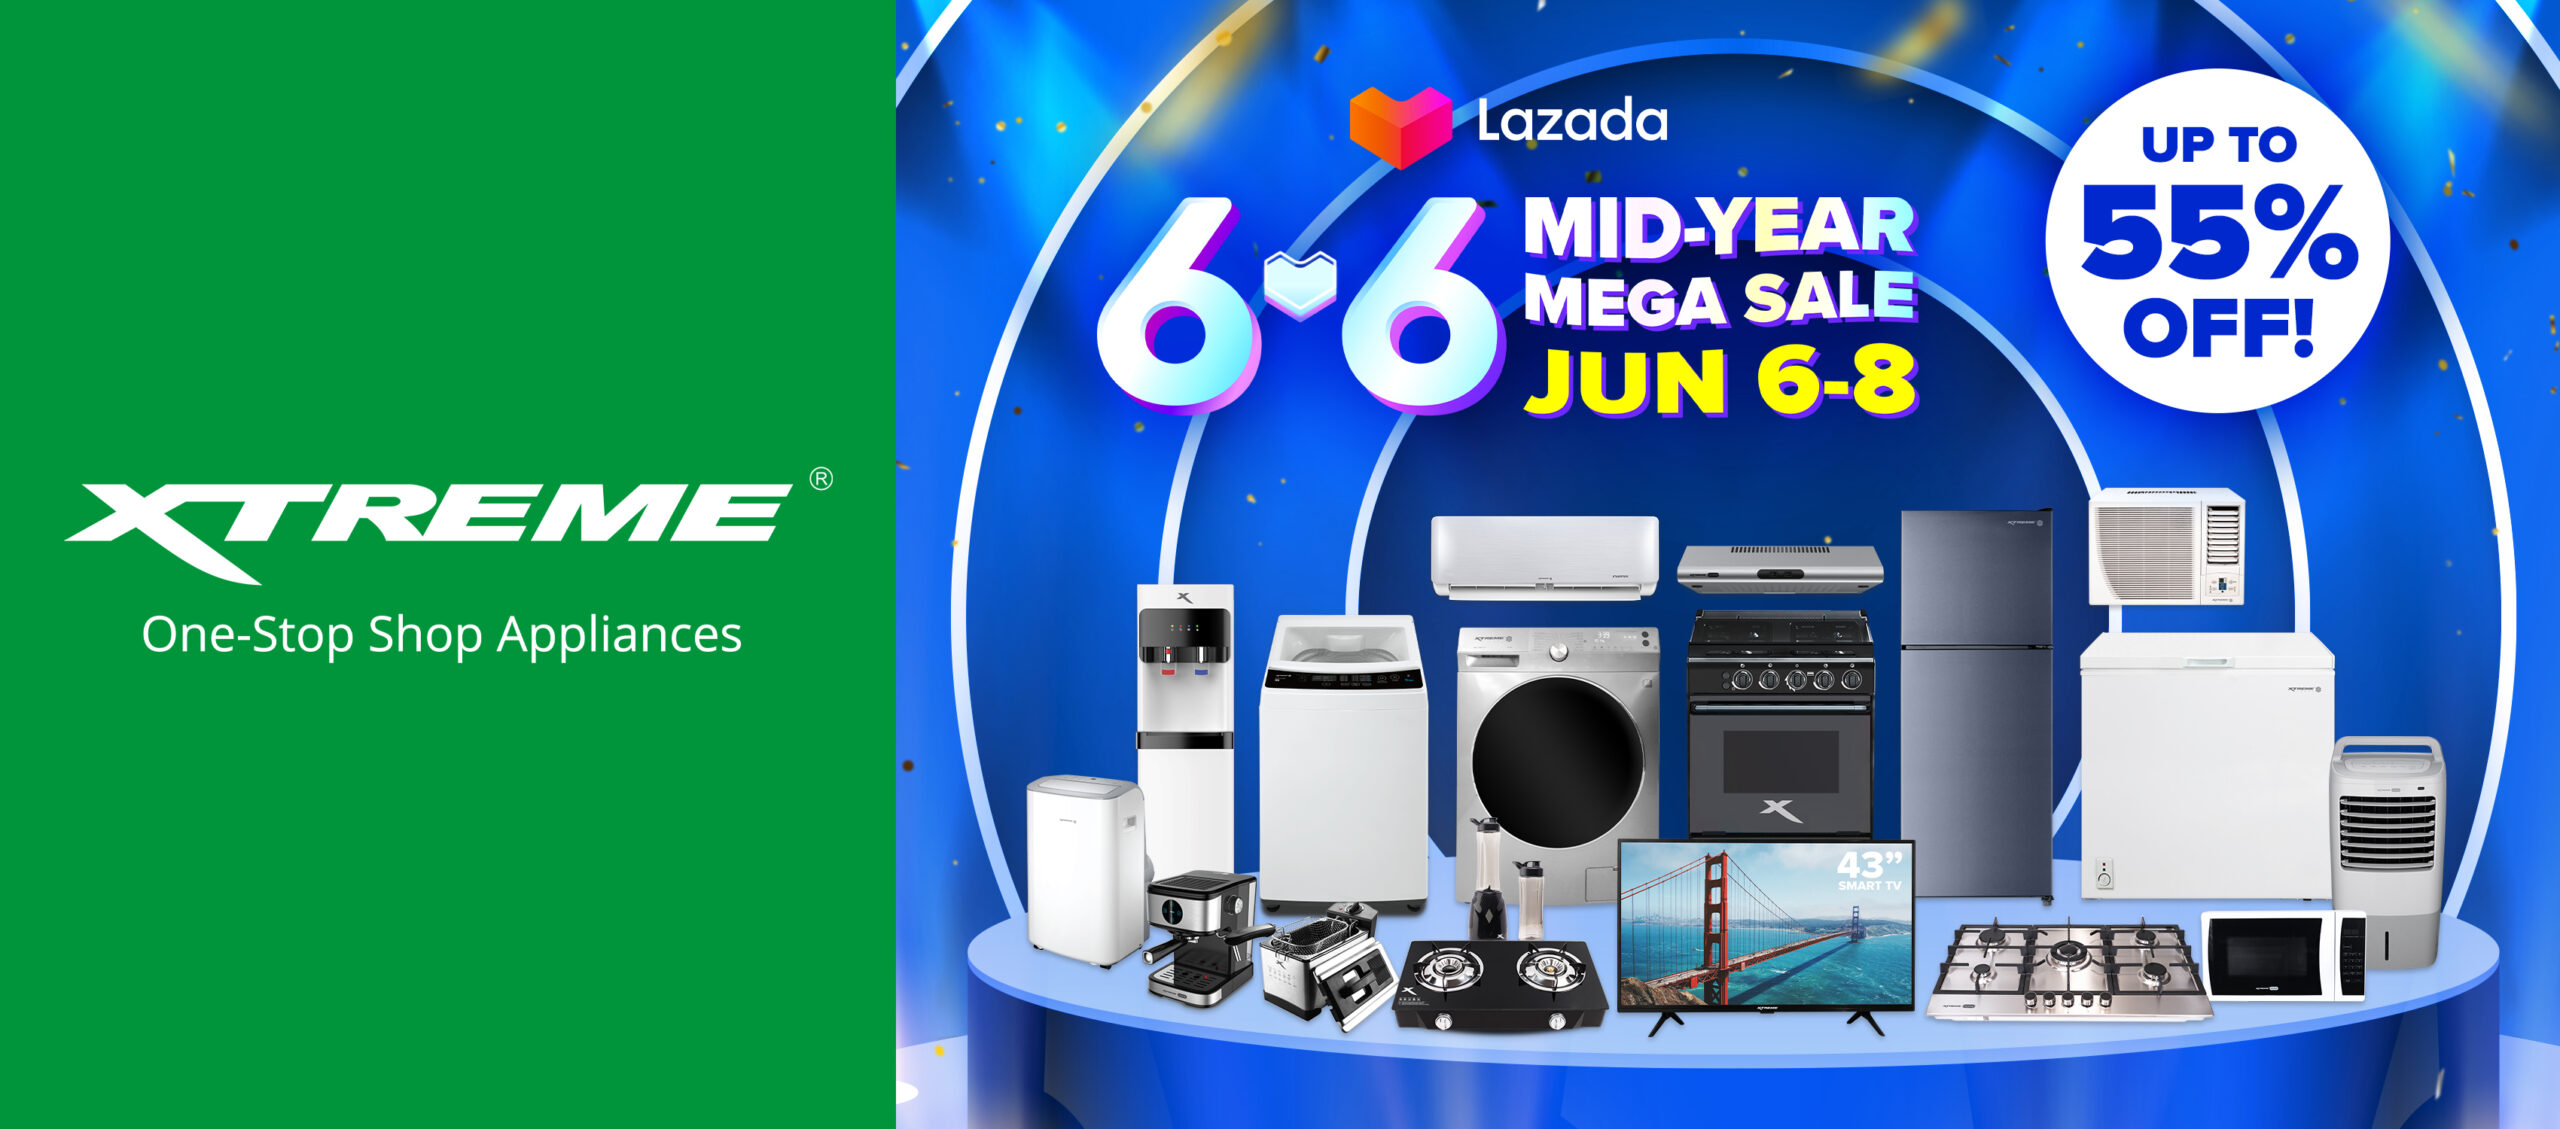 Enjoy up to 55% off at XTREME Appliances Lazada 6.6 Mid-Year Mega Sale